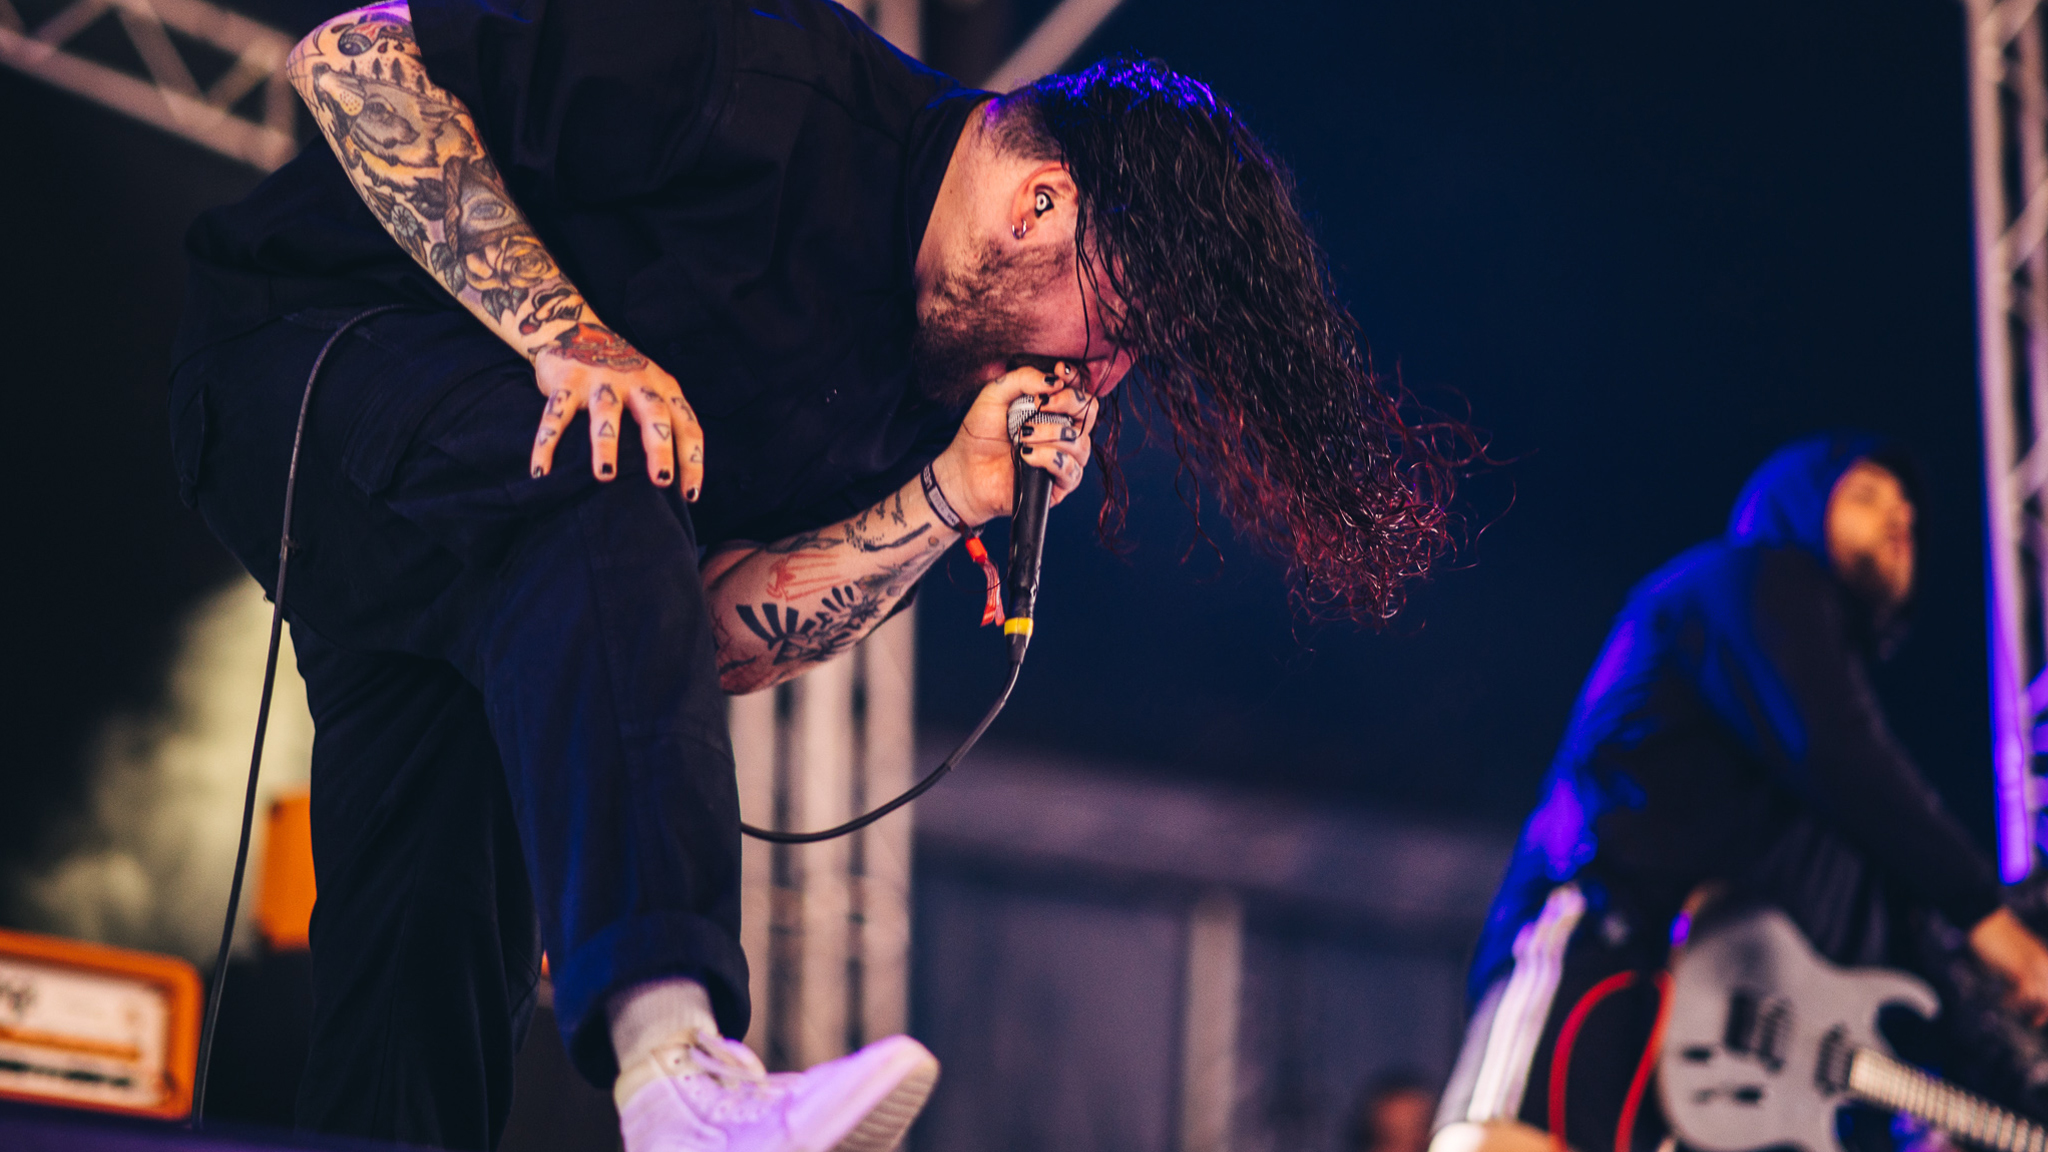 Slipknot's Corey Taylor slams rock bands that sound too “soft”